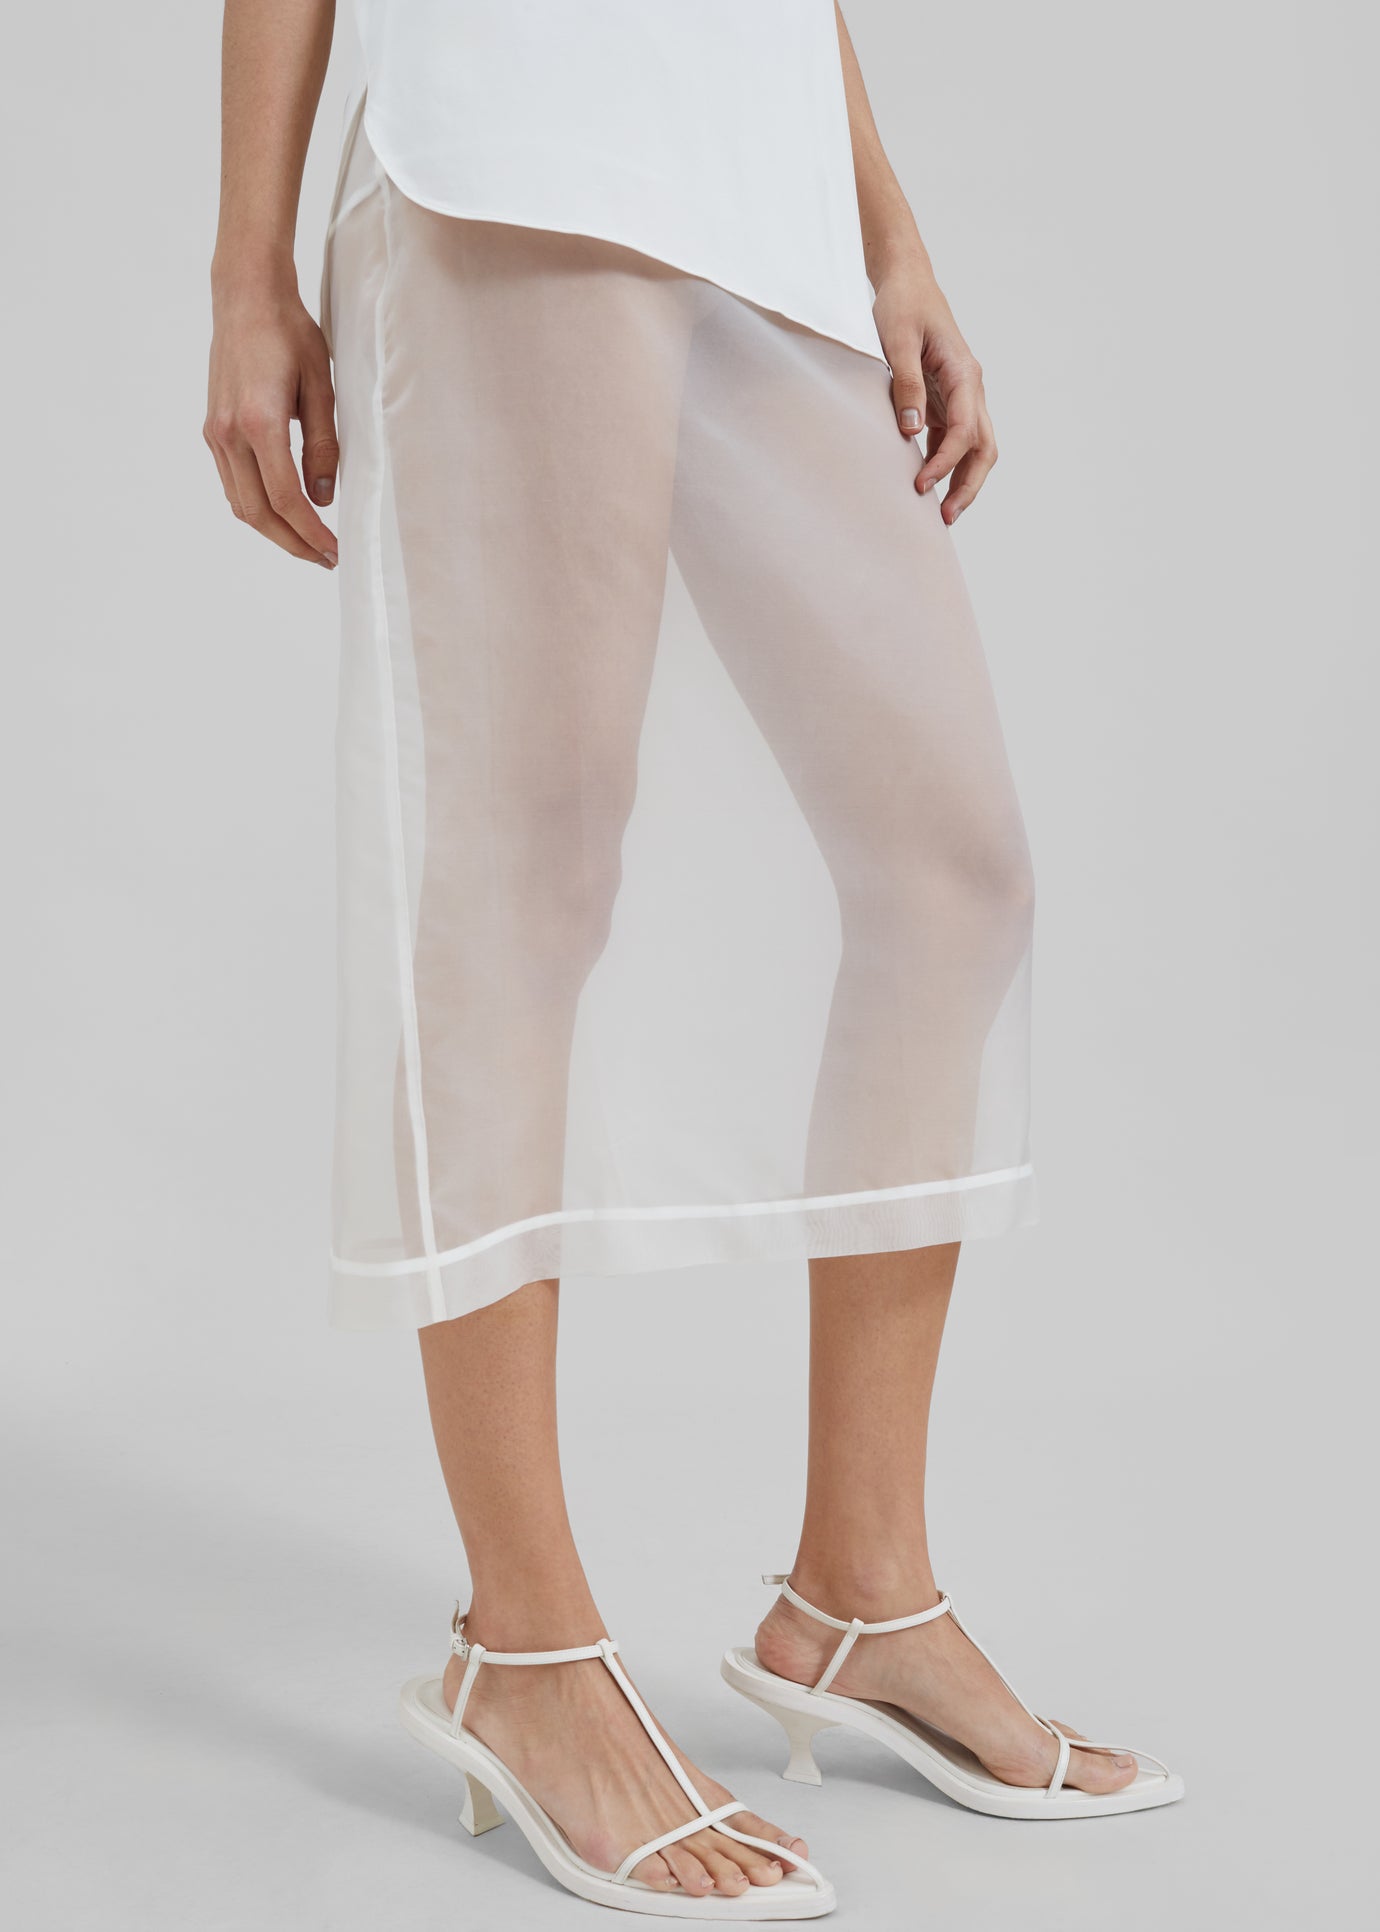 Peri Sheer Midi Skirt - White